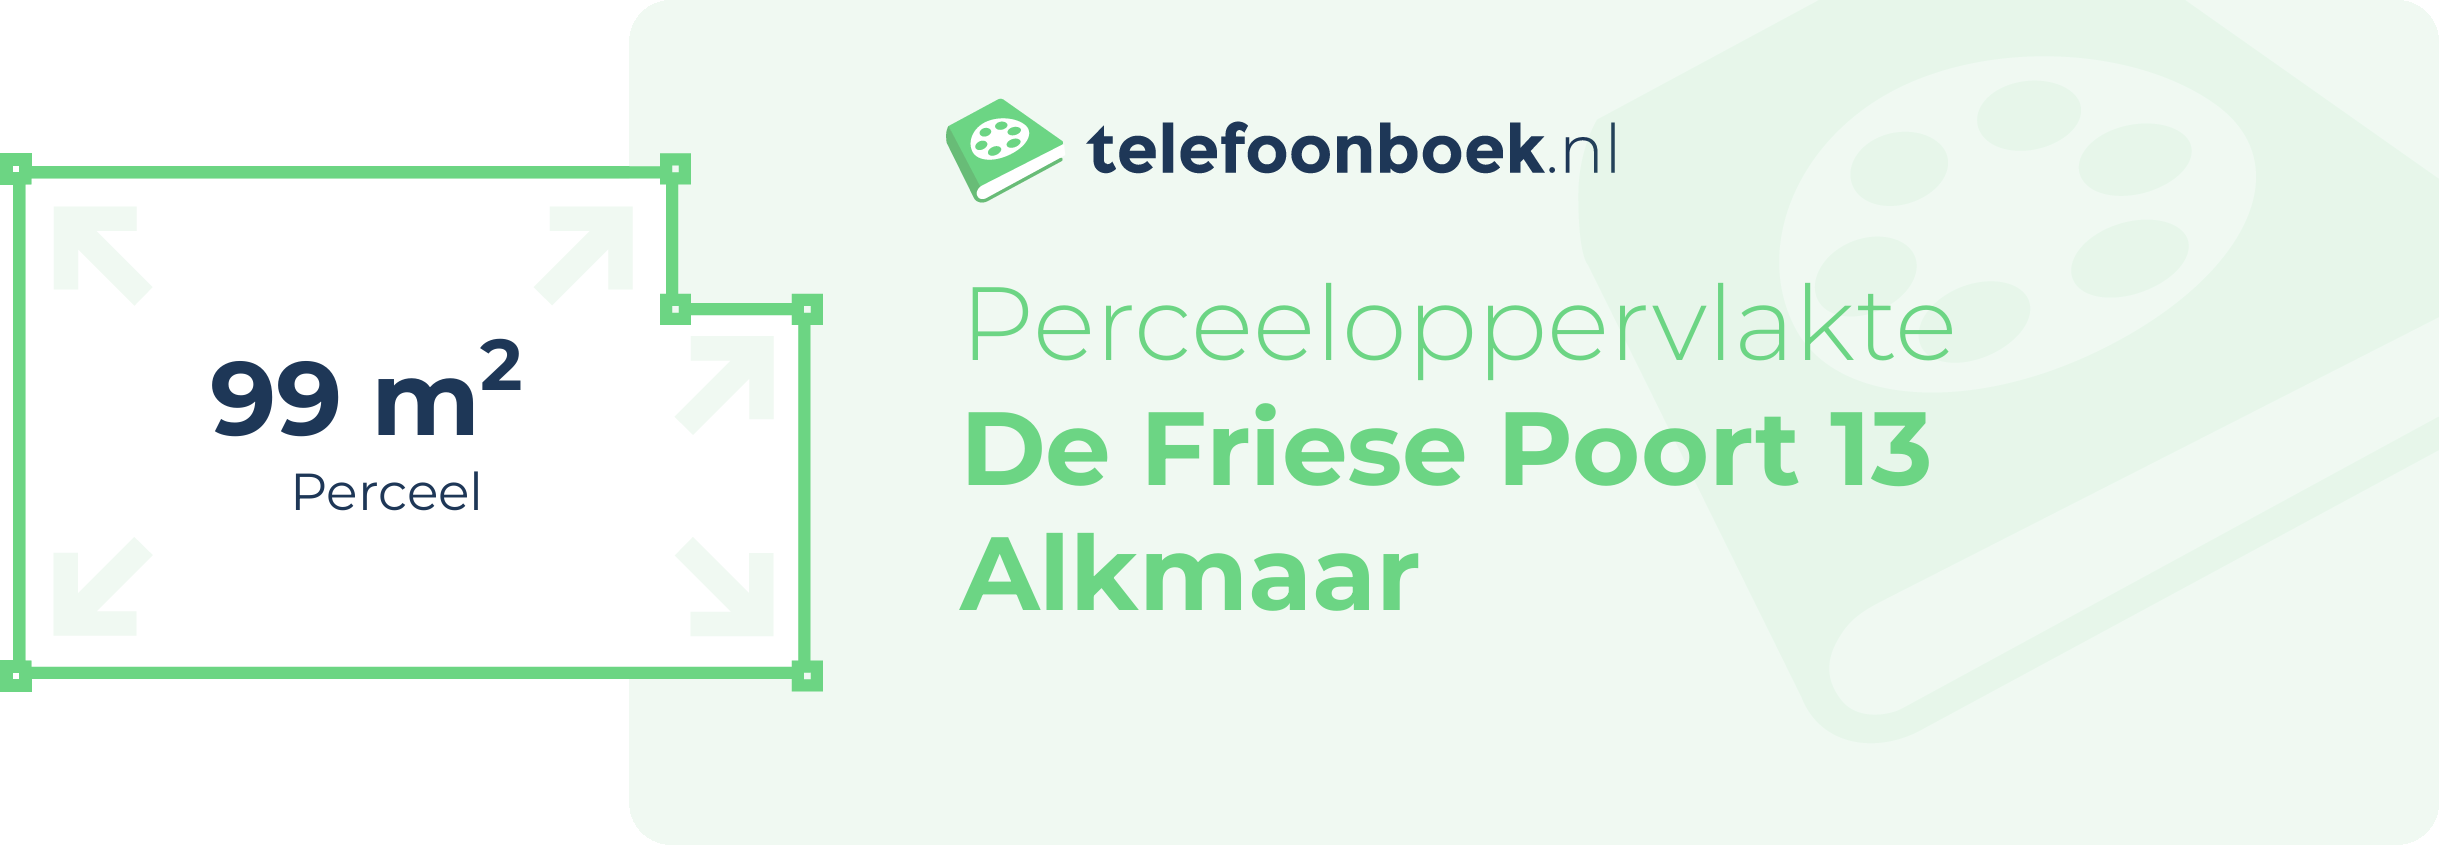 Perceeloppervlakte De Friese Poort 13 Alkmaar